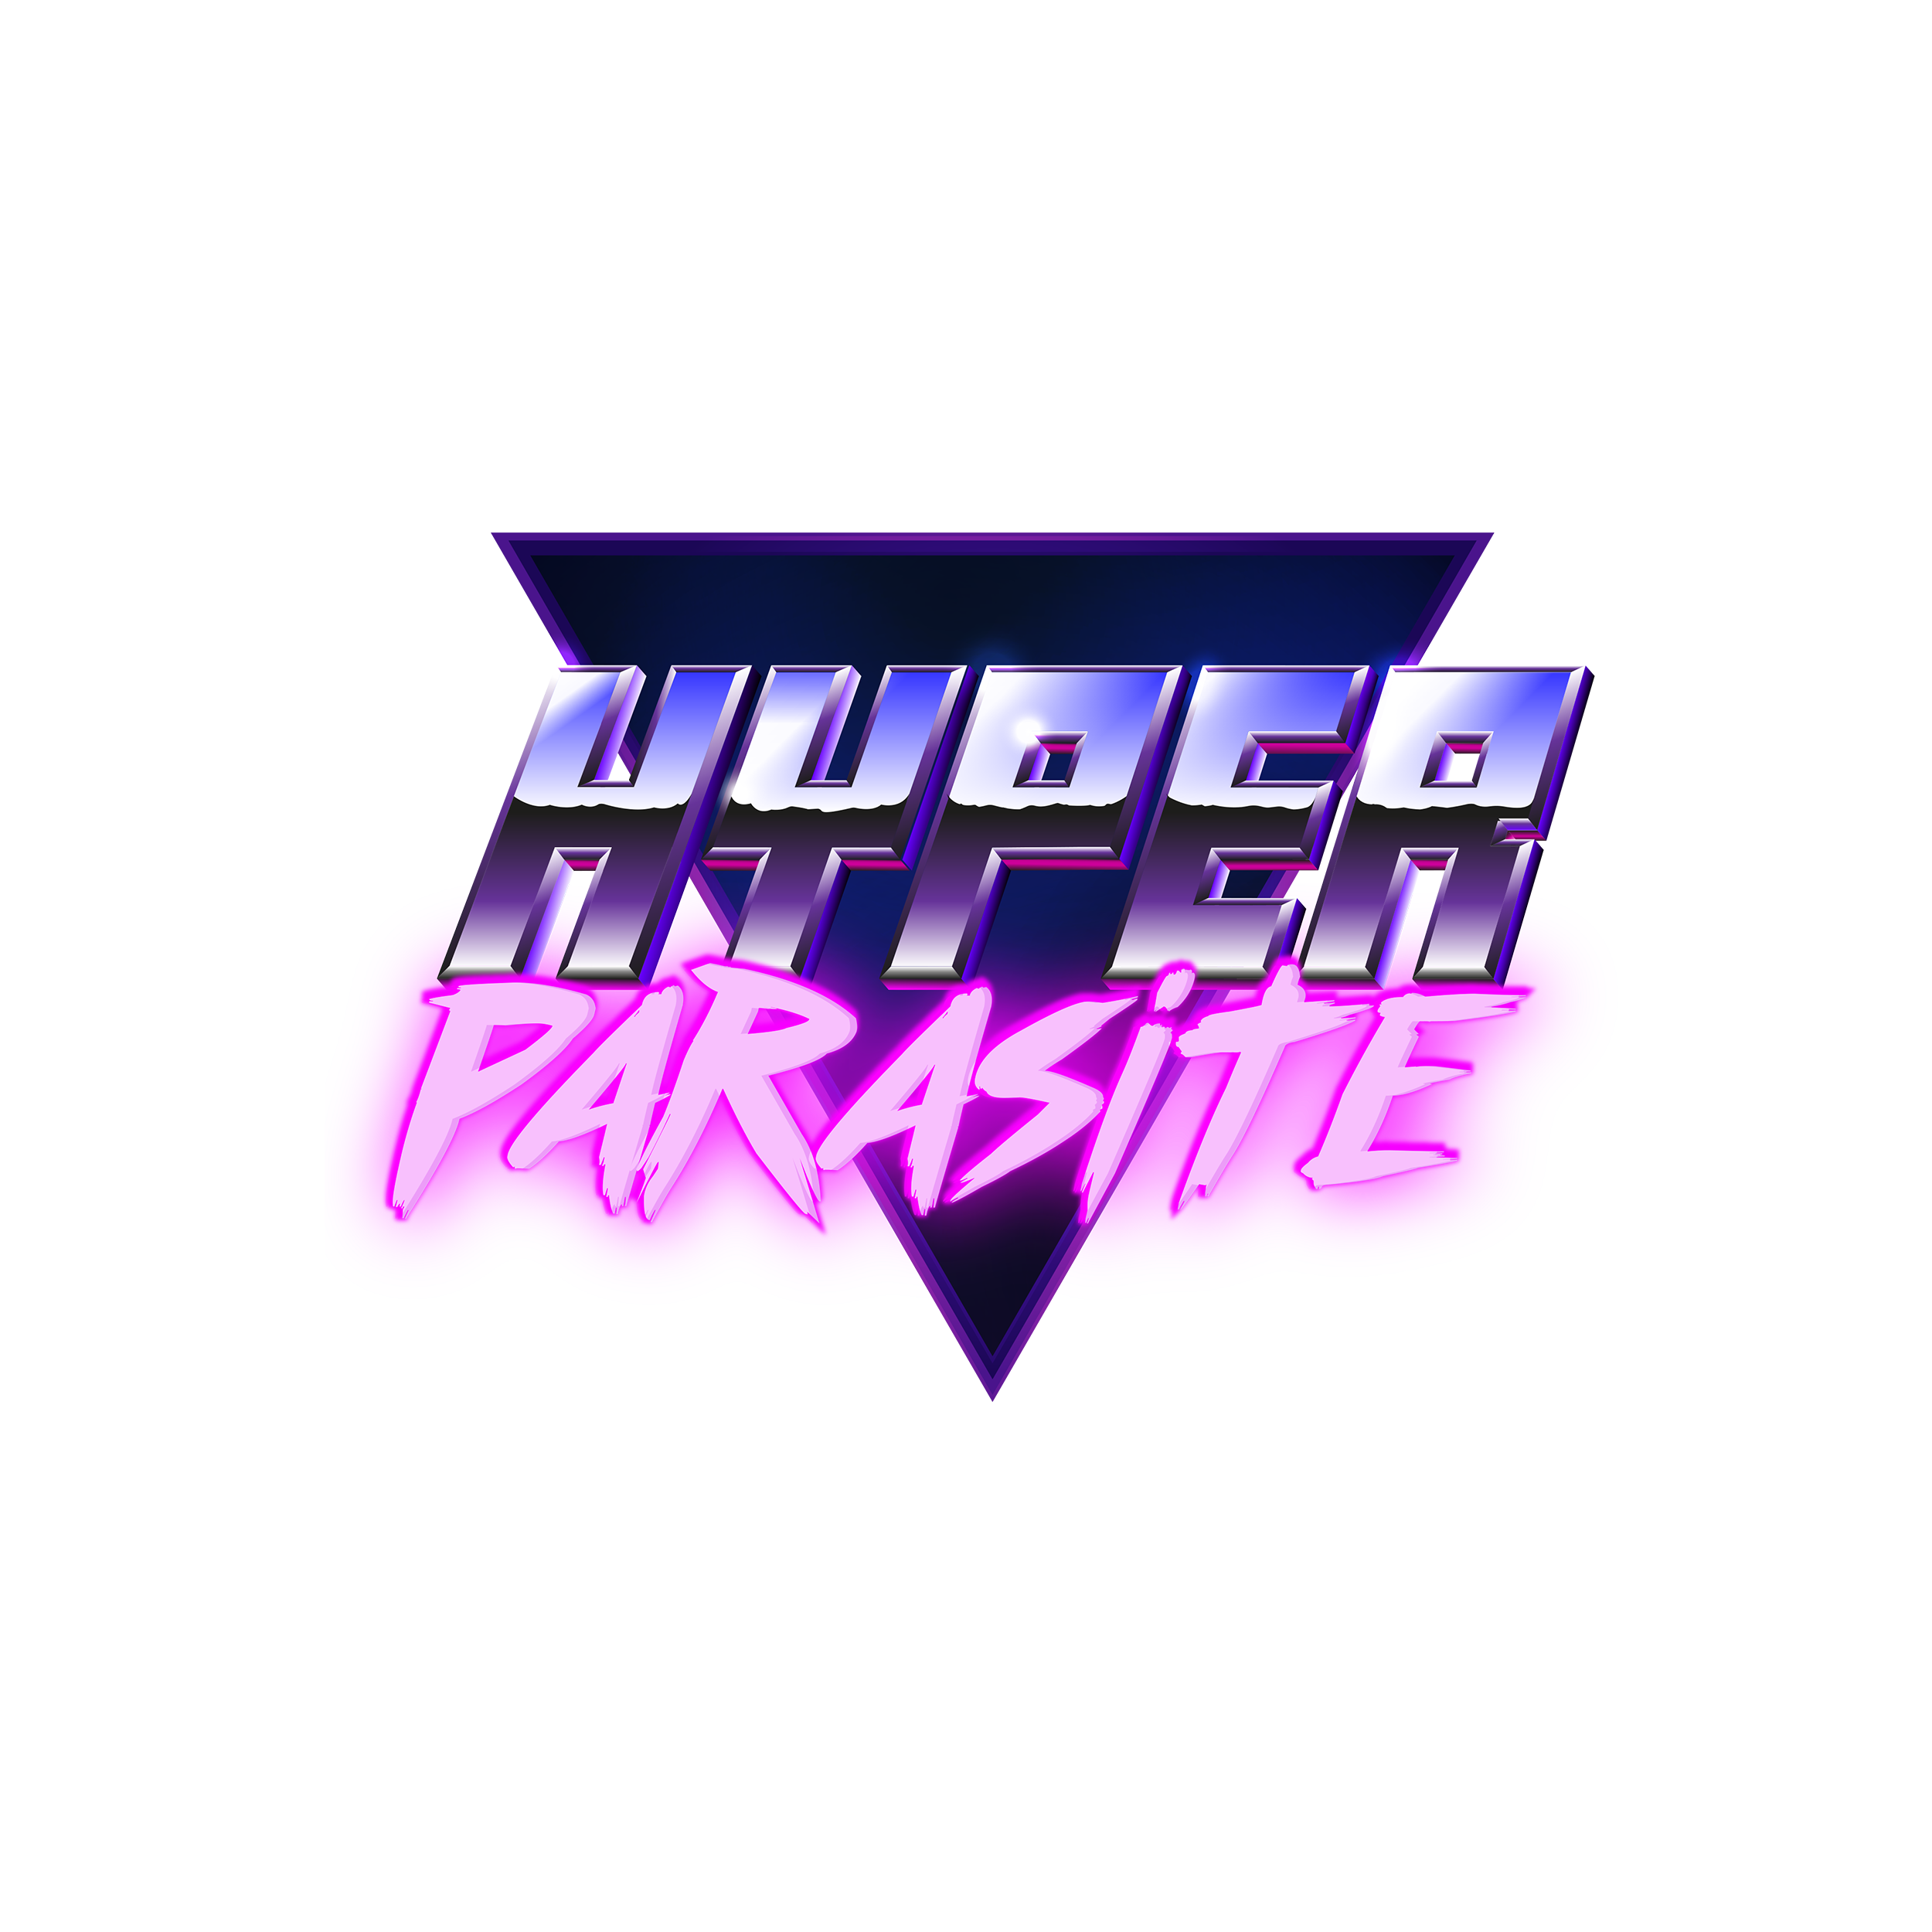 HyperParasite logo